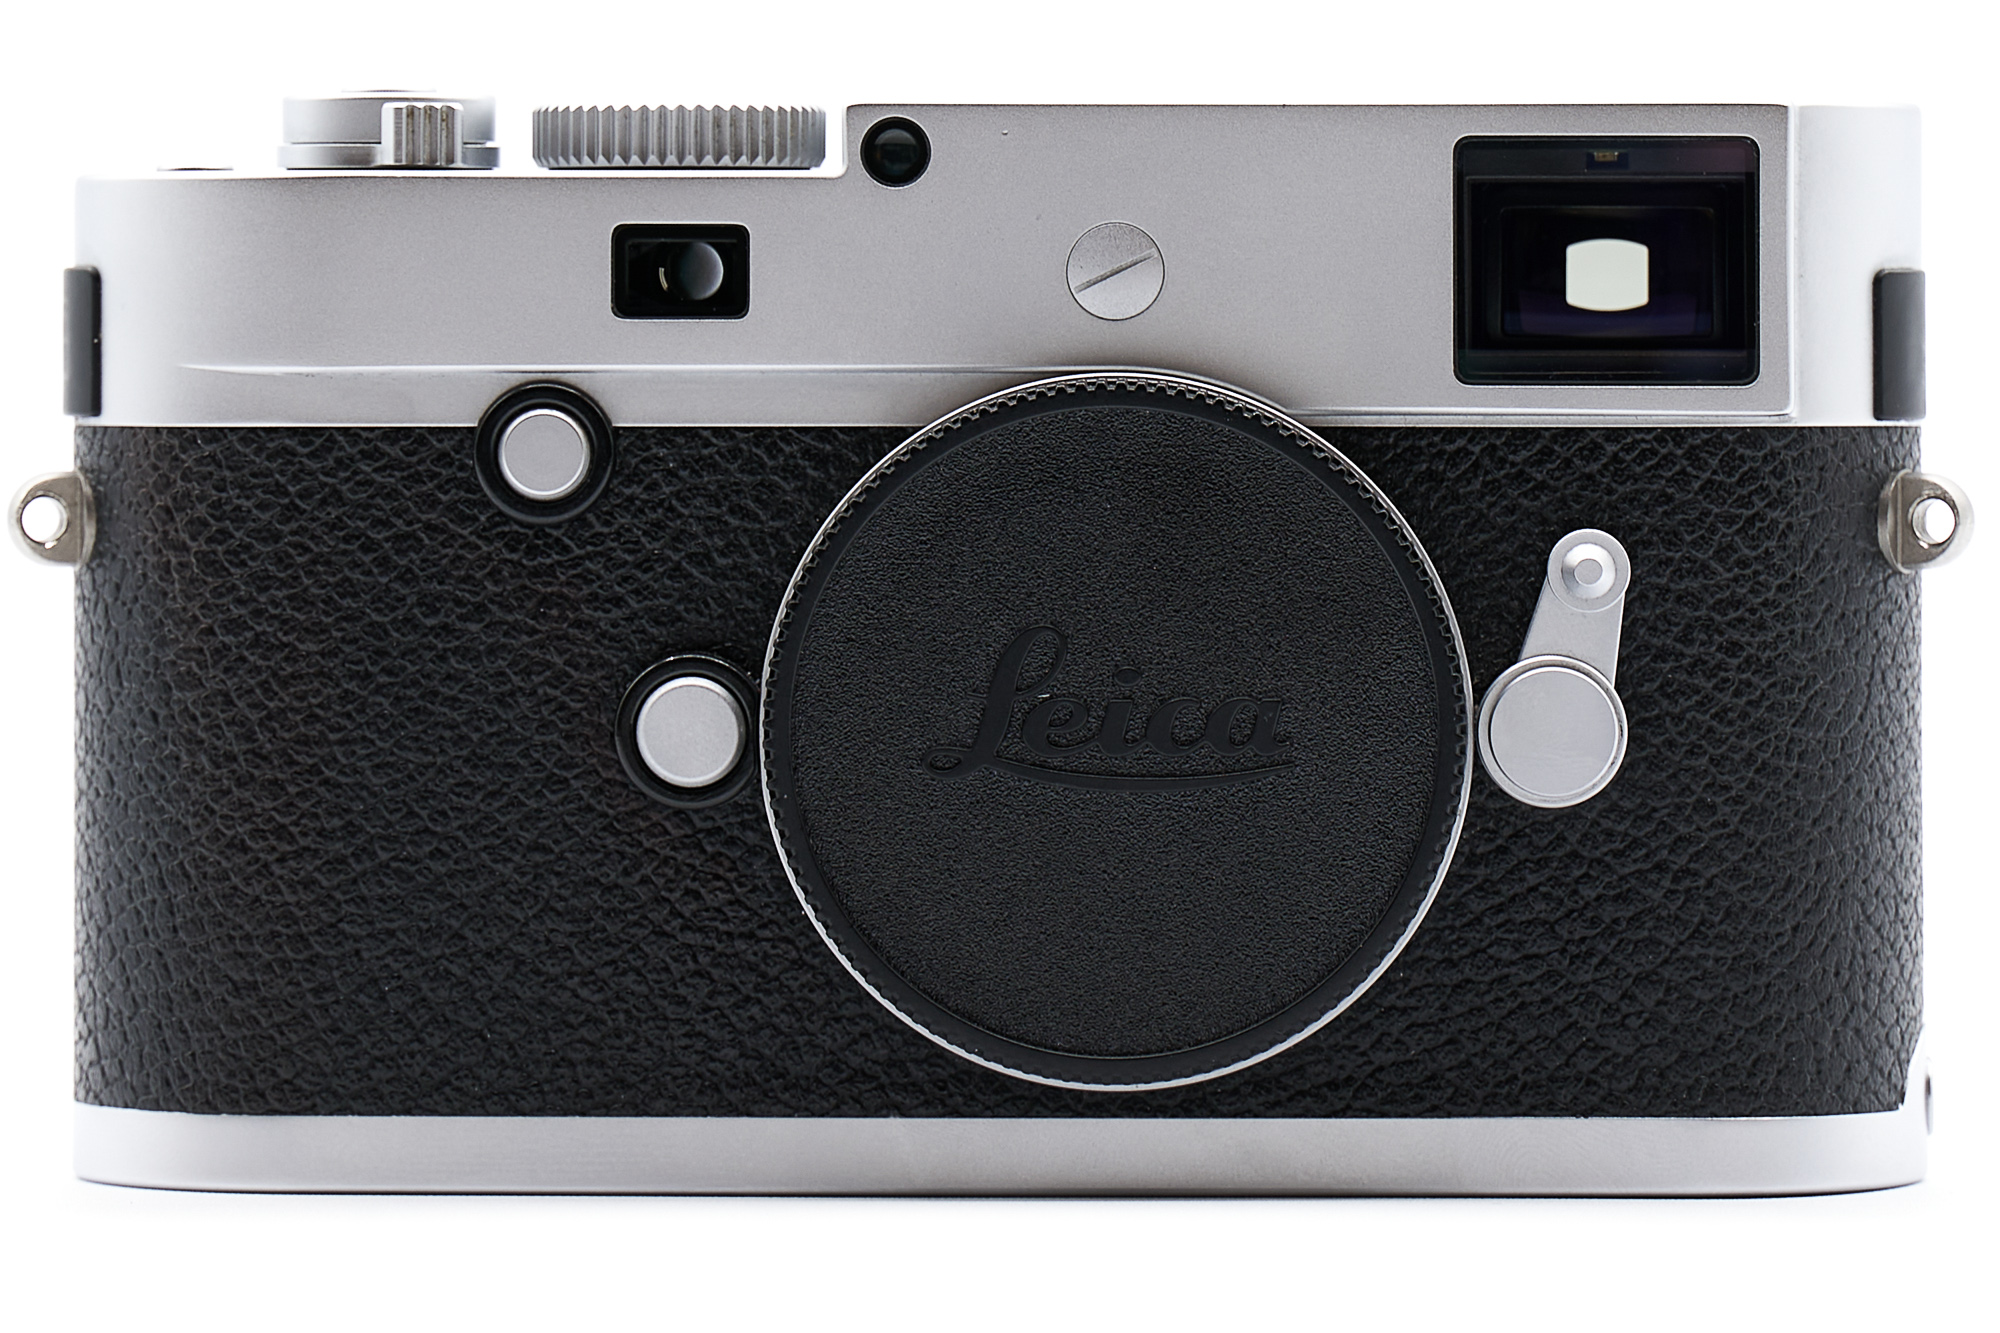 Leica MP (Typ 240) Silver